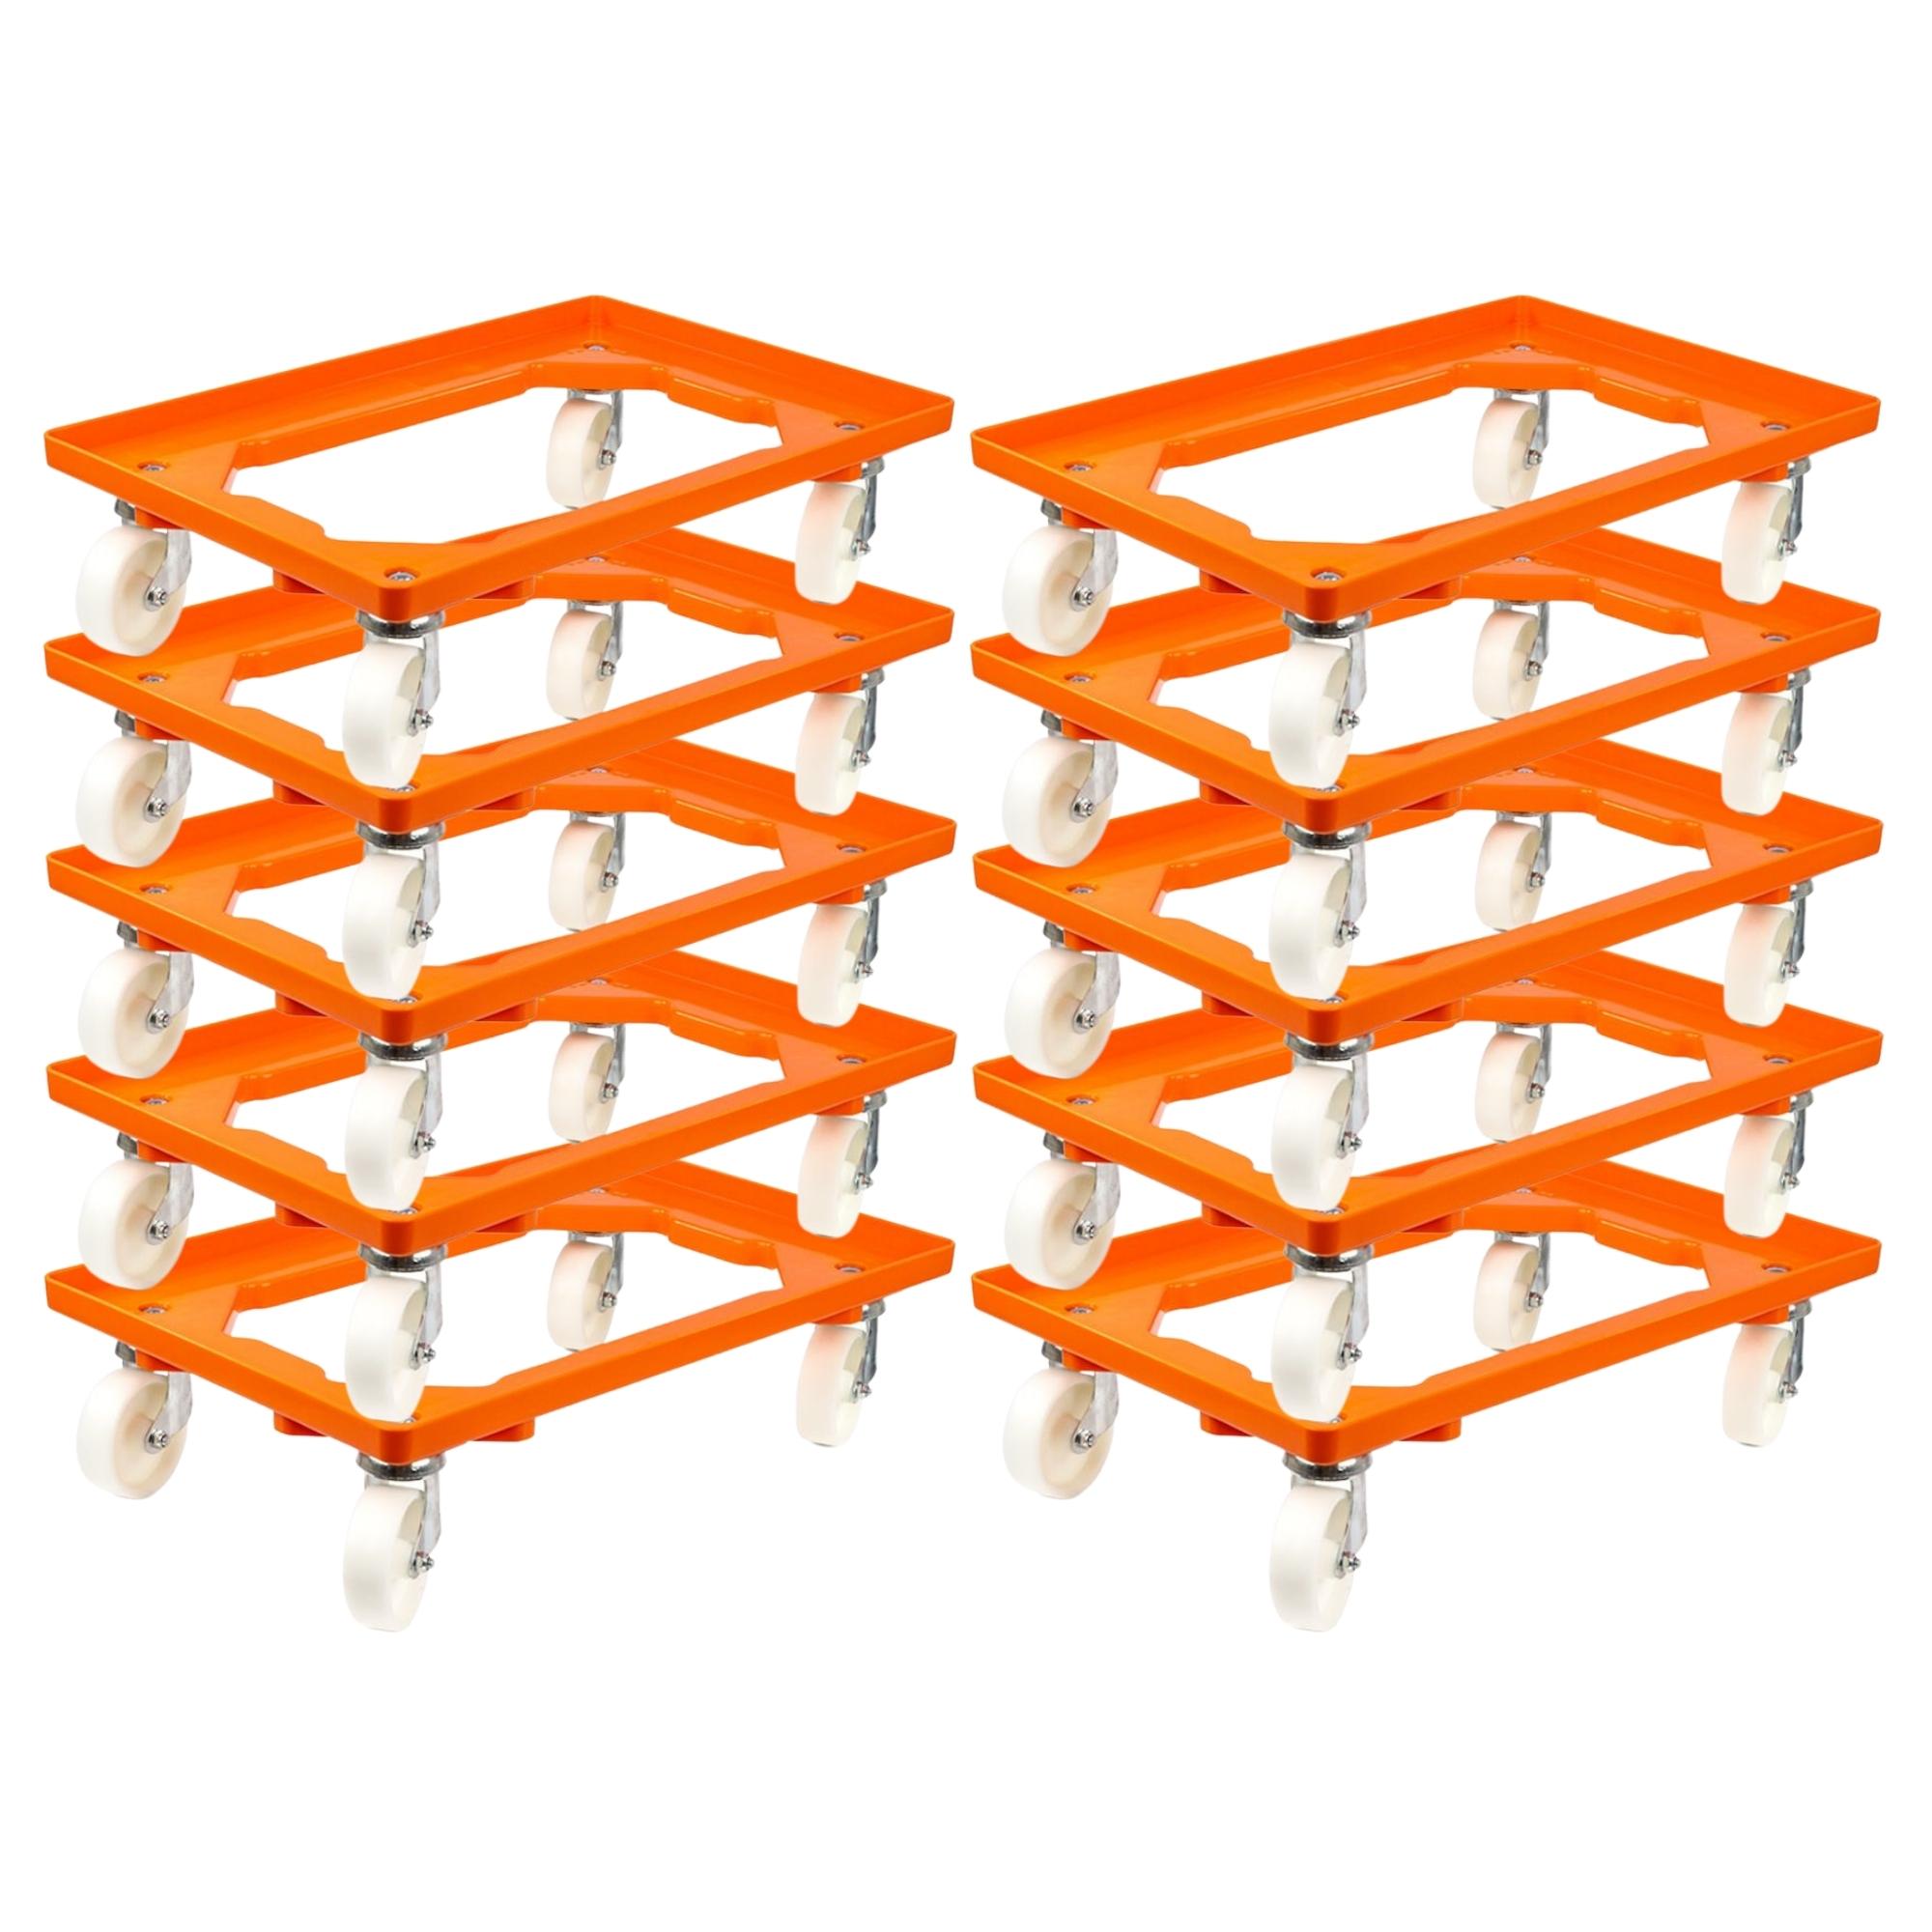 SparSet 10x Transportroller für Euroboxen 60x40cm mit Kunststoffräder orange | Offenes Deck | 2 Lenkrollen & 2 Bockrollen | Traglast 300kg | Kistenroller Logistikroller Rollwagen Profi-Fahrgestell